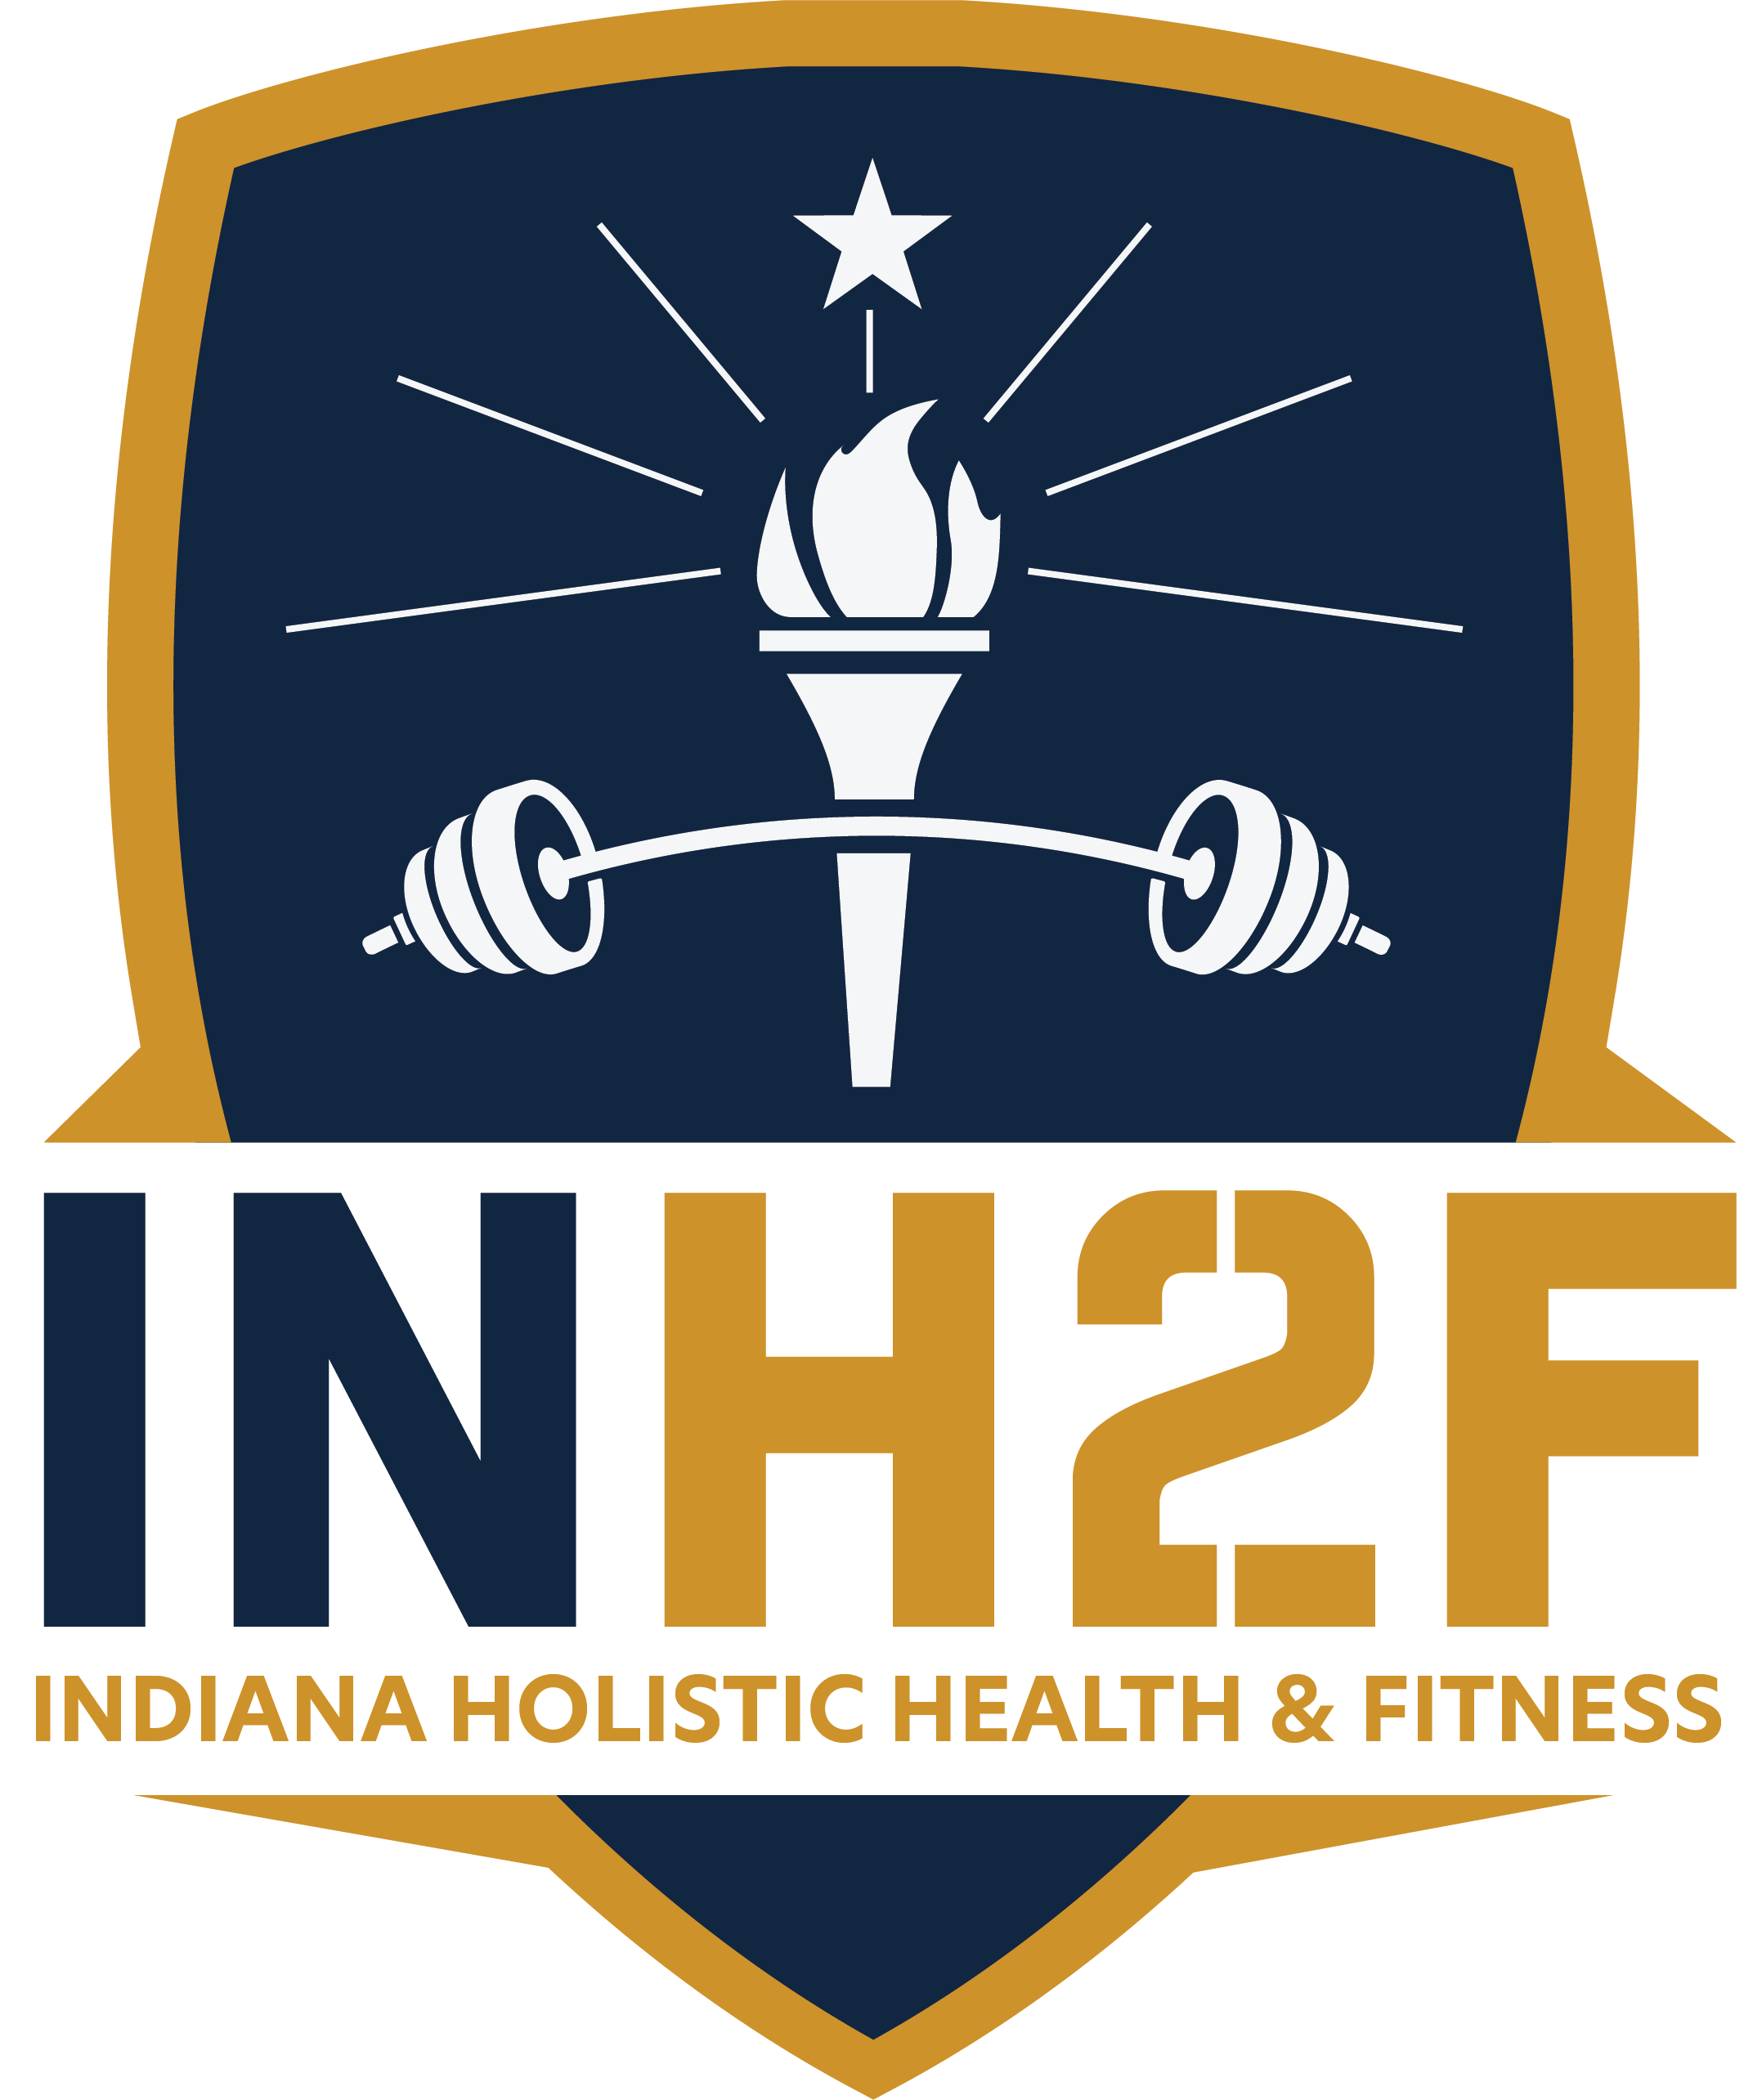 Indiana H2F